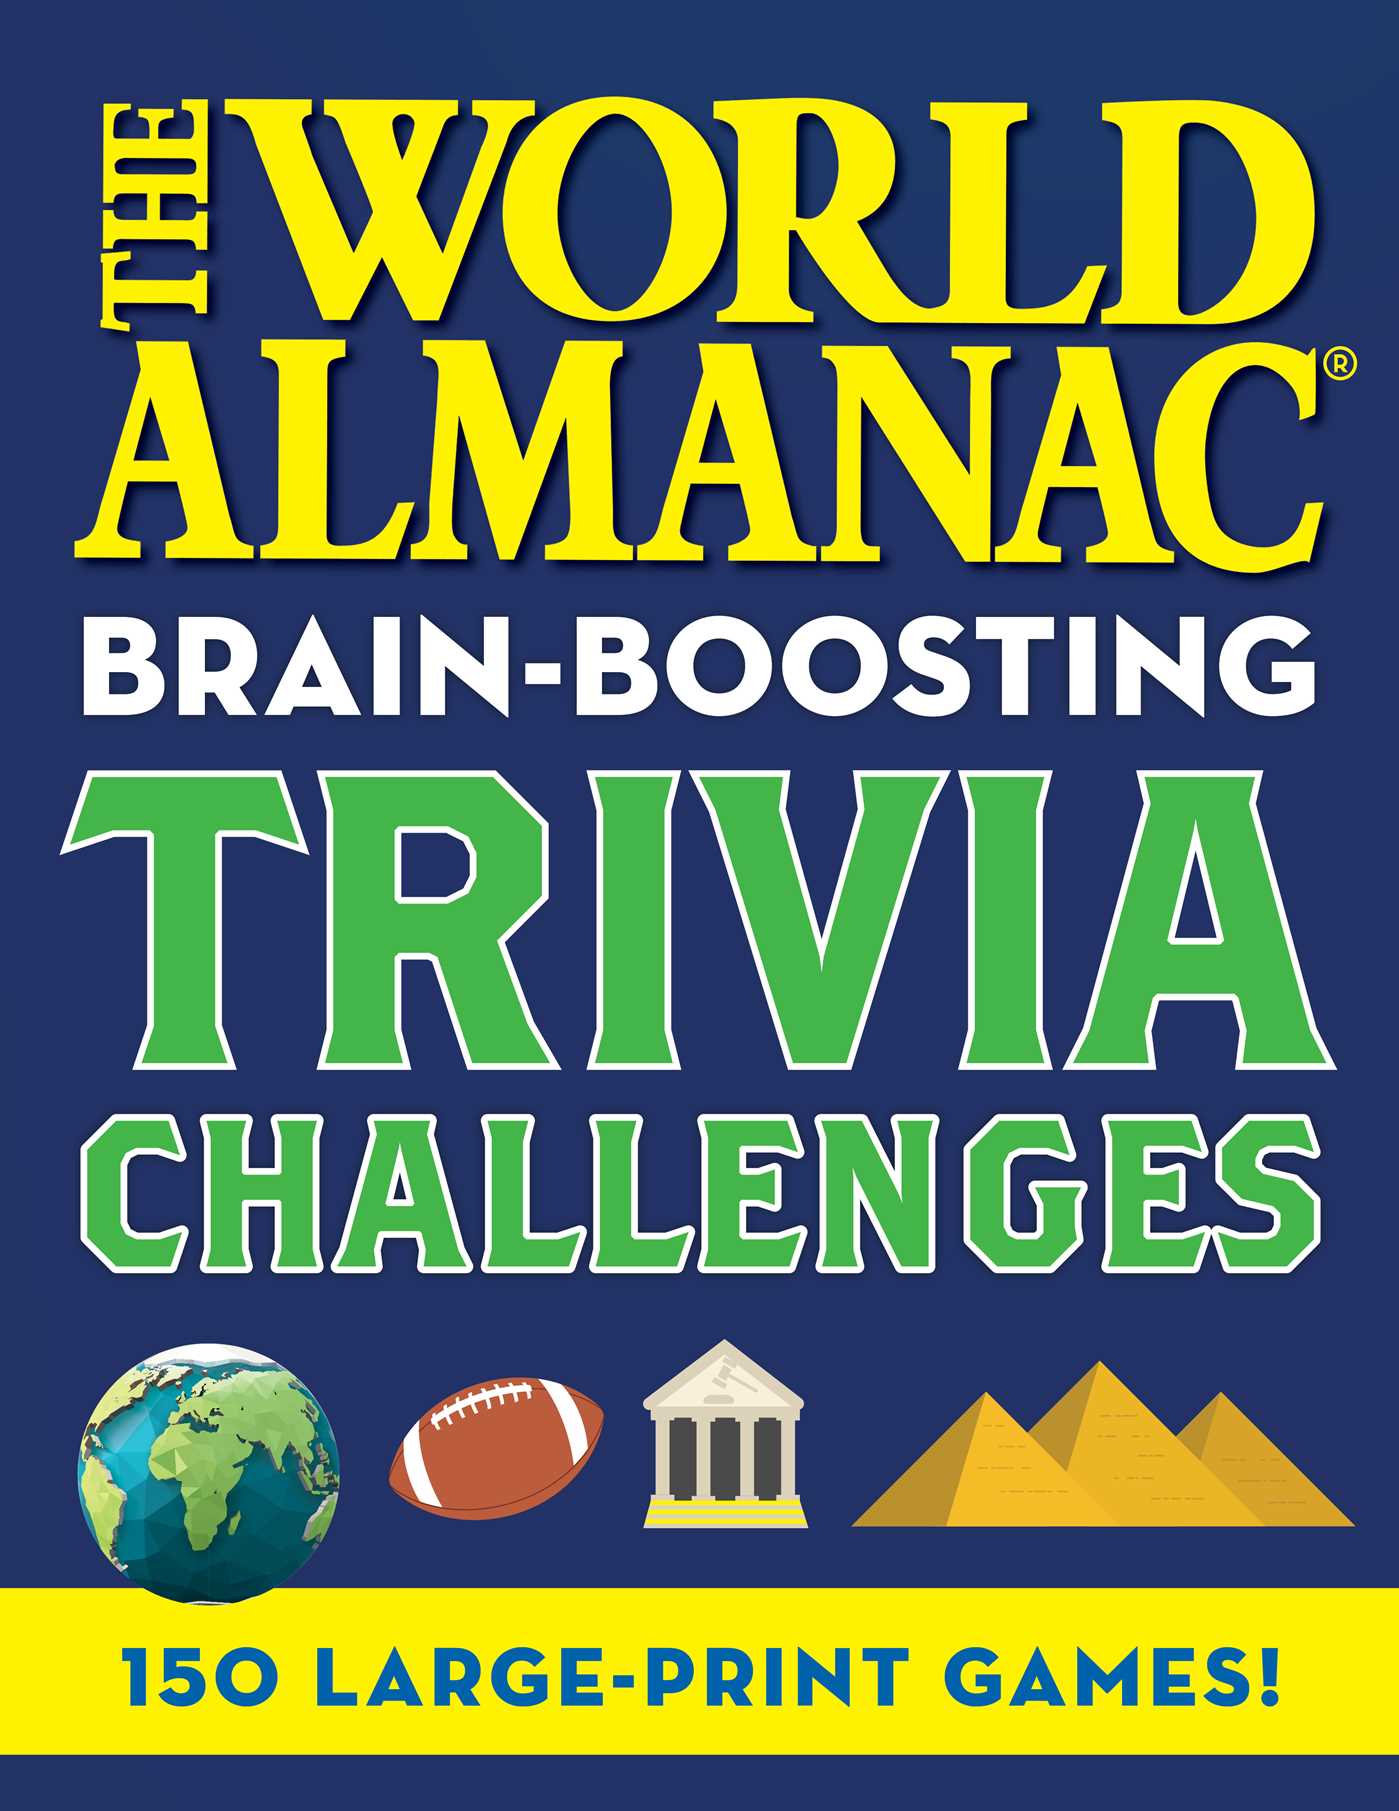 The World Almanac Brain-Boosting Trivia Challenges : 150 Large-Print Games! | 